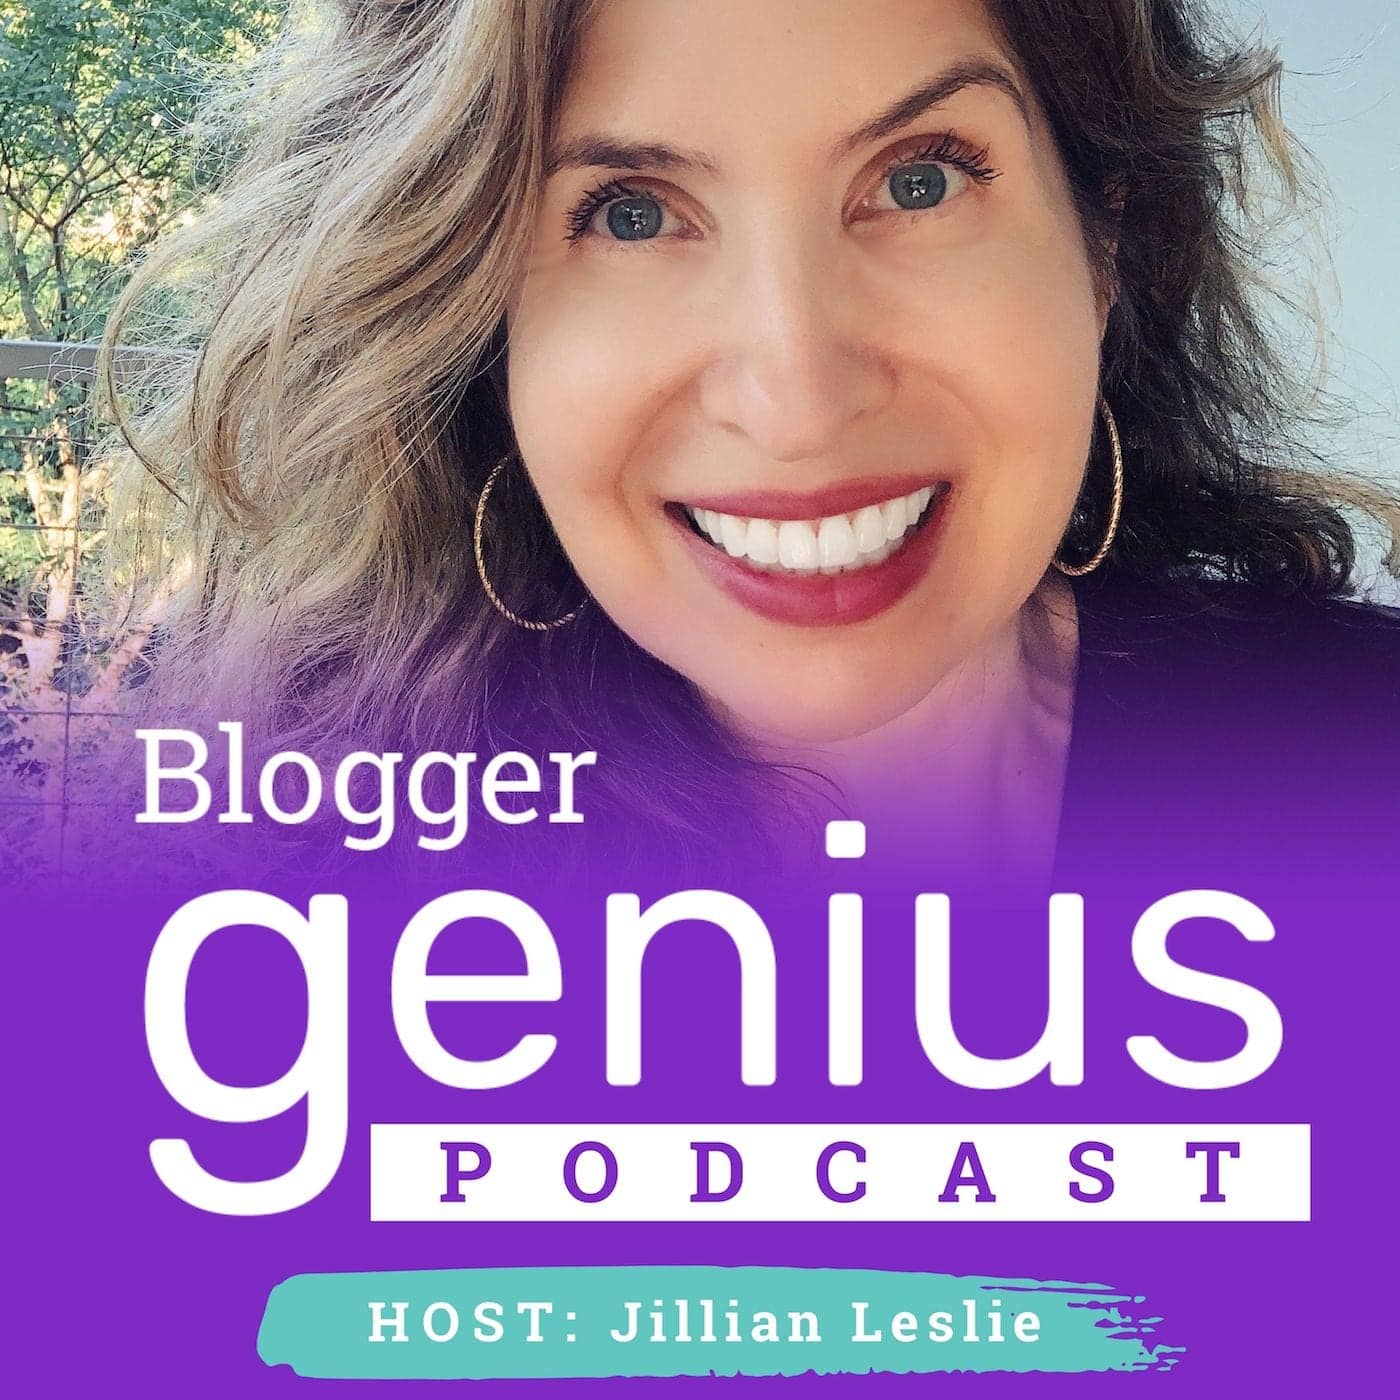 The Blogger Genius Podcast